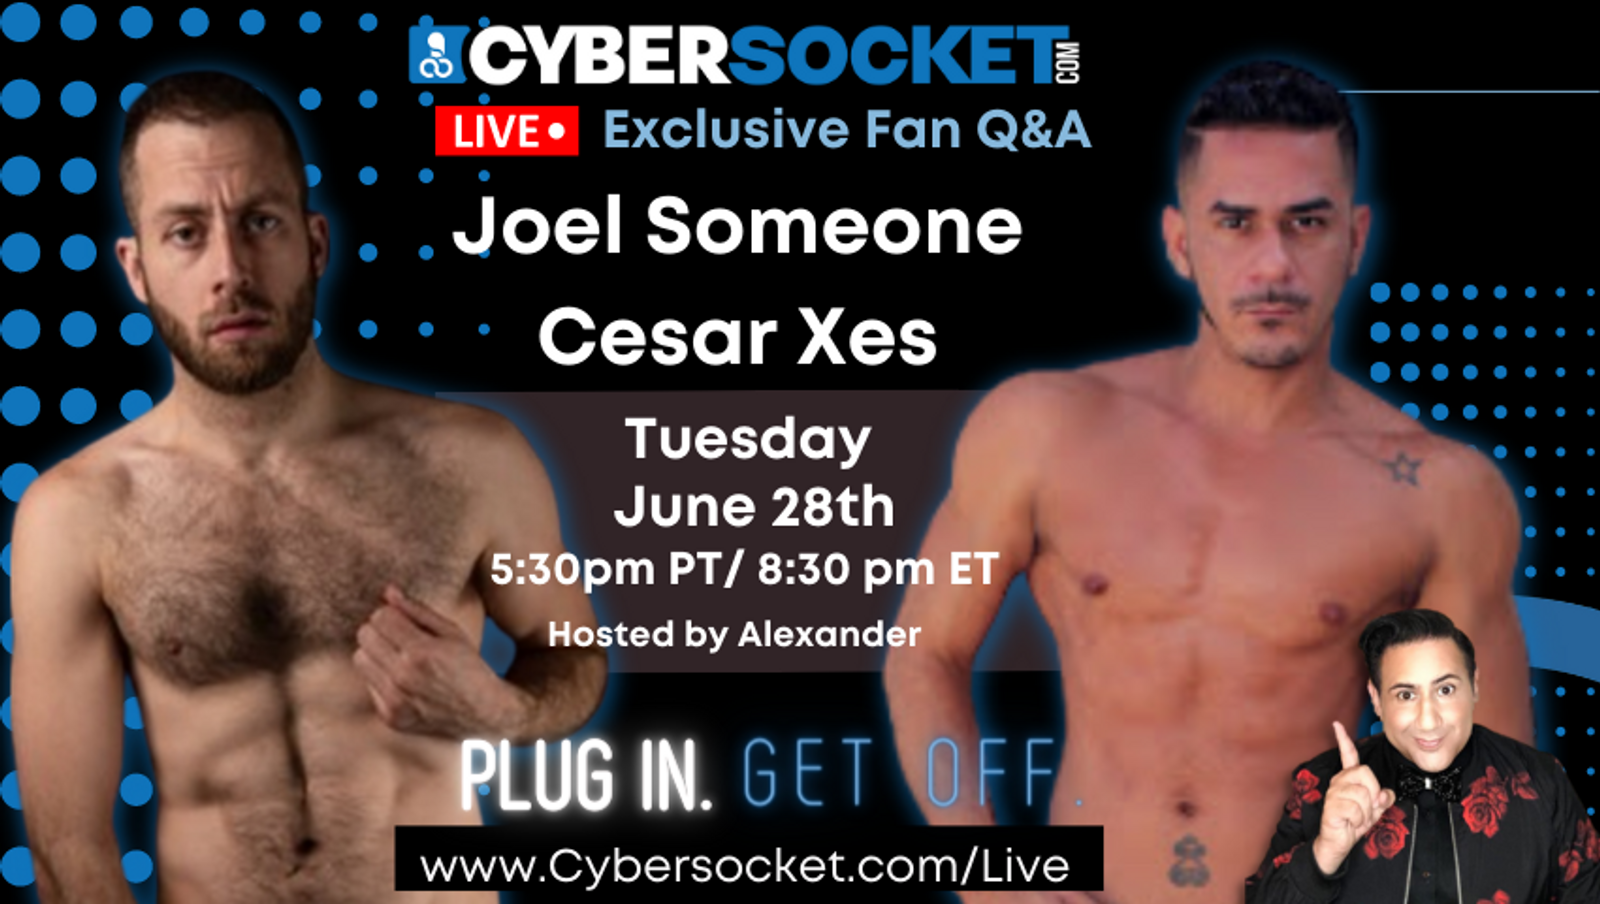 'Cybersocket Live' Hosts Fan Chat With Cesar Xes & Joel Someone